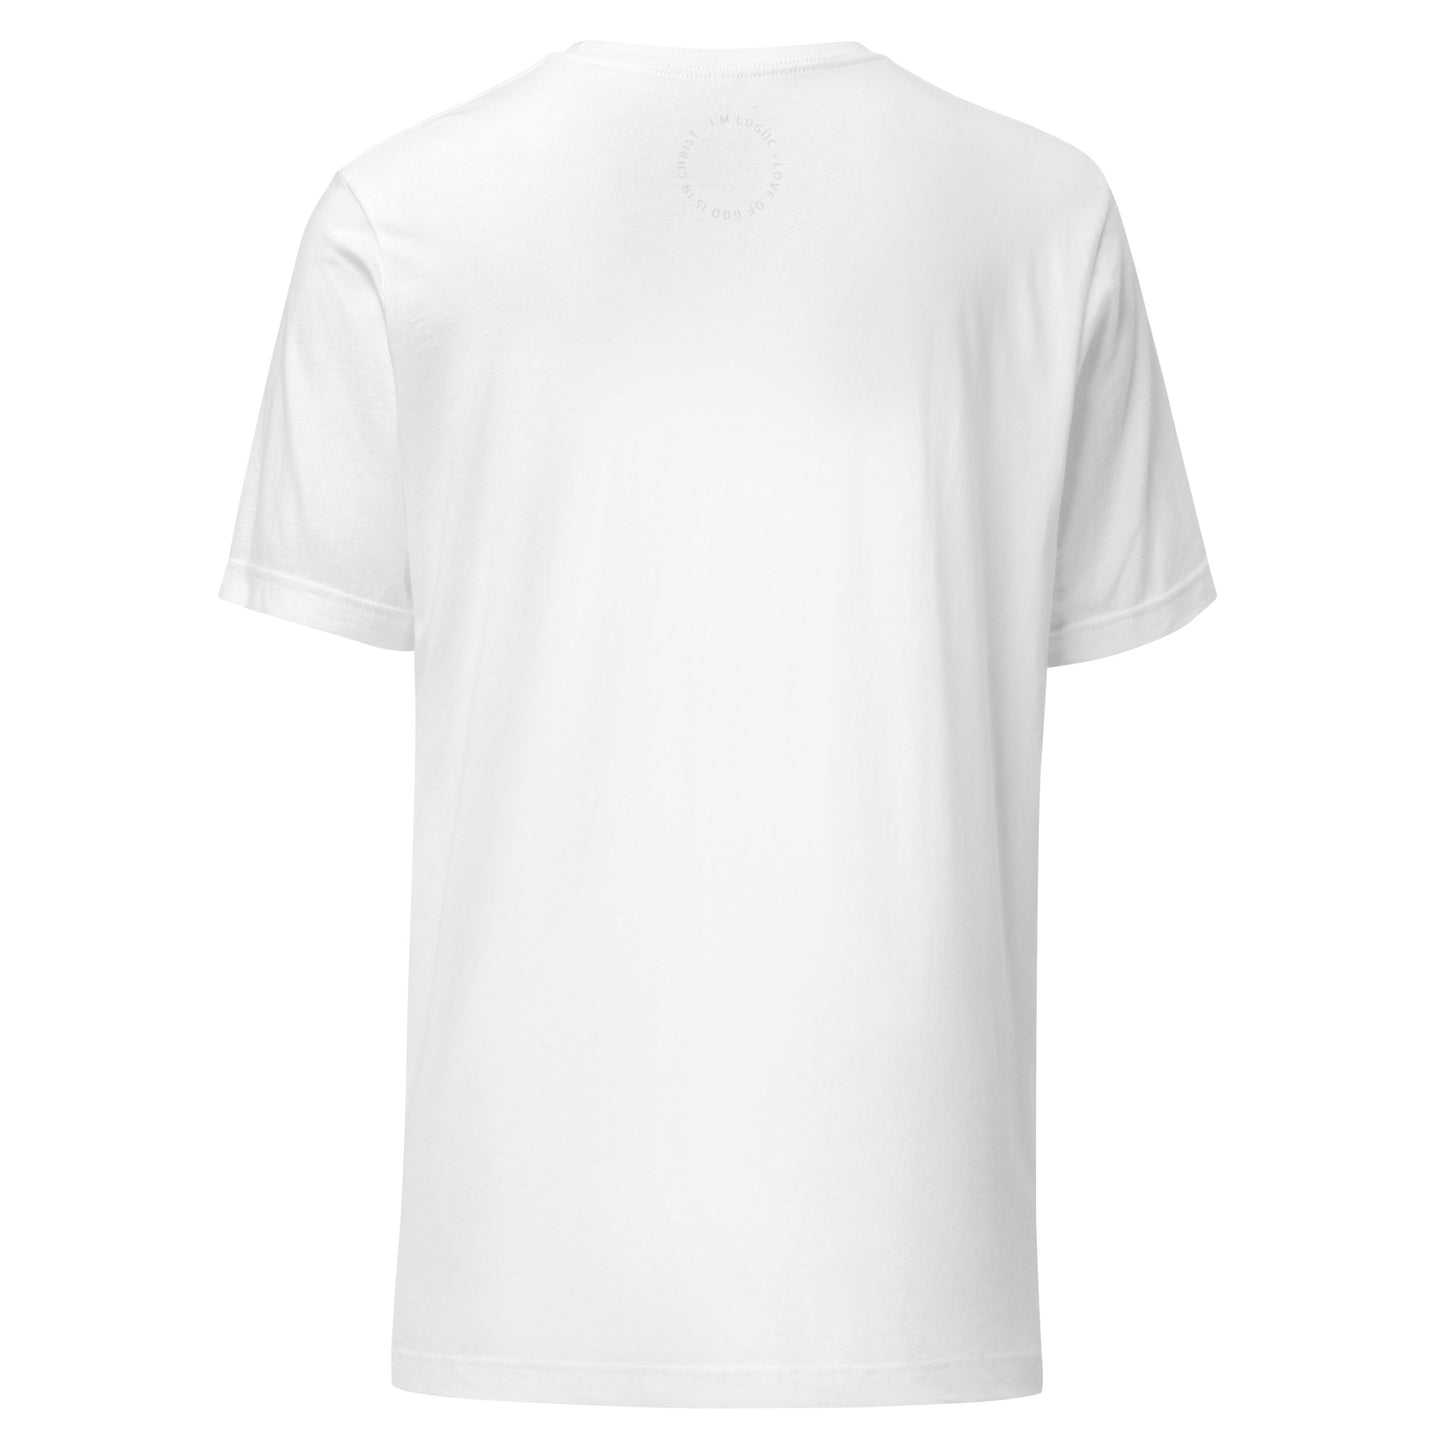 Praise Hands Unisex t-shirt - White / S - Shirts & Tops